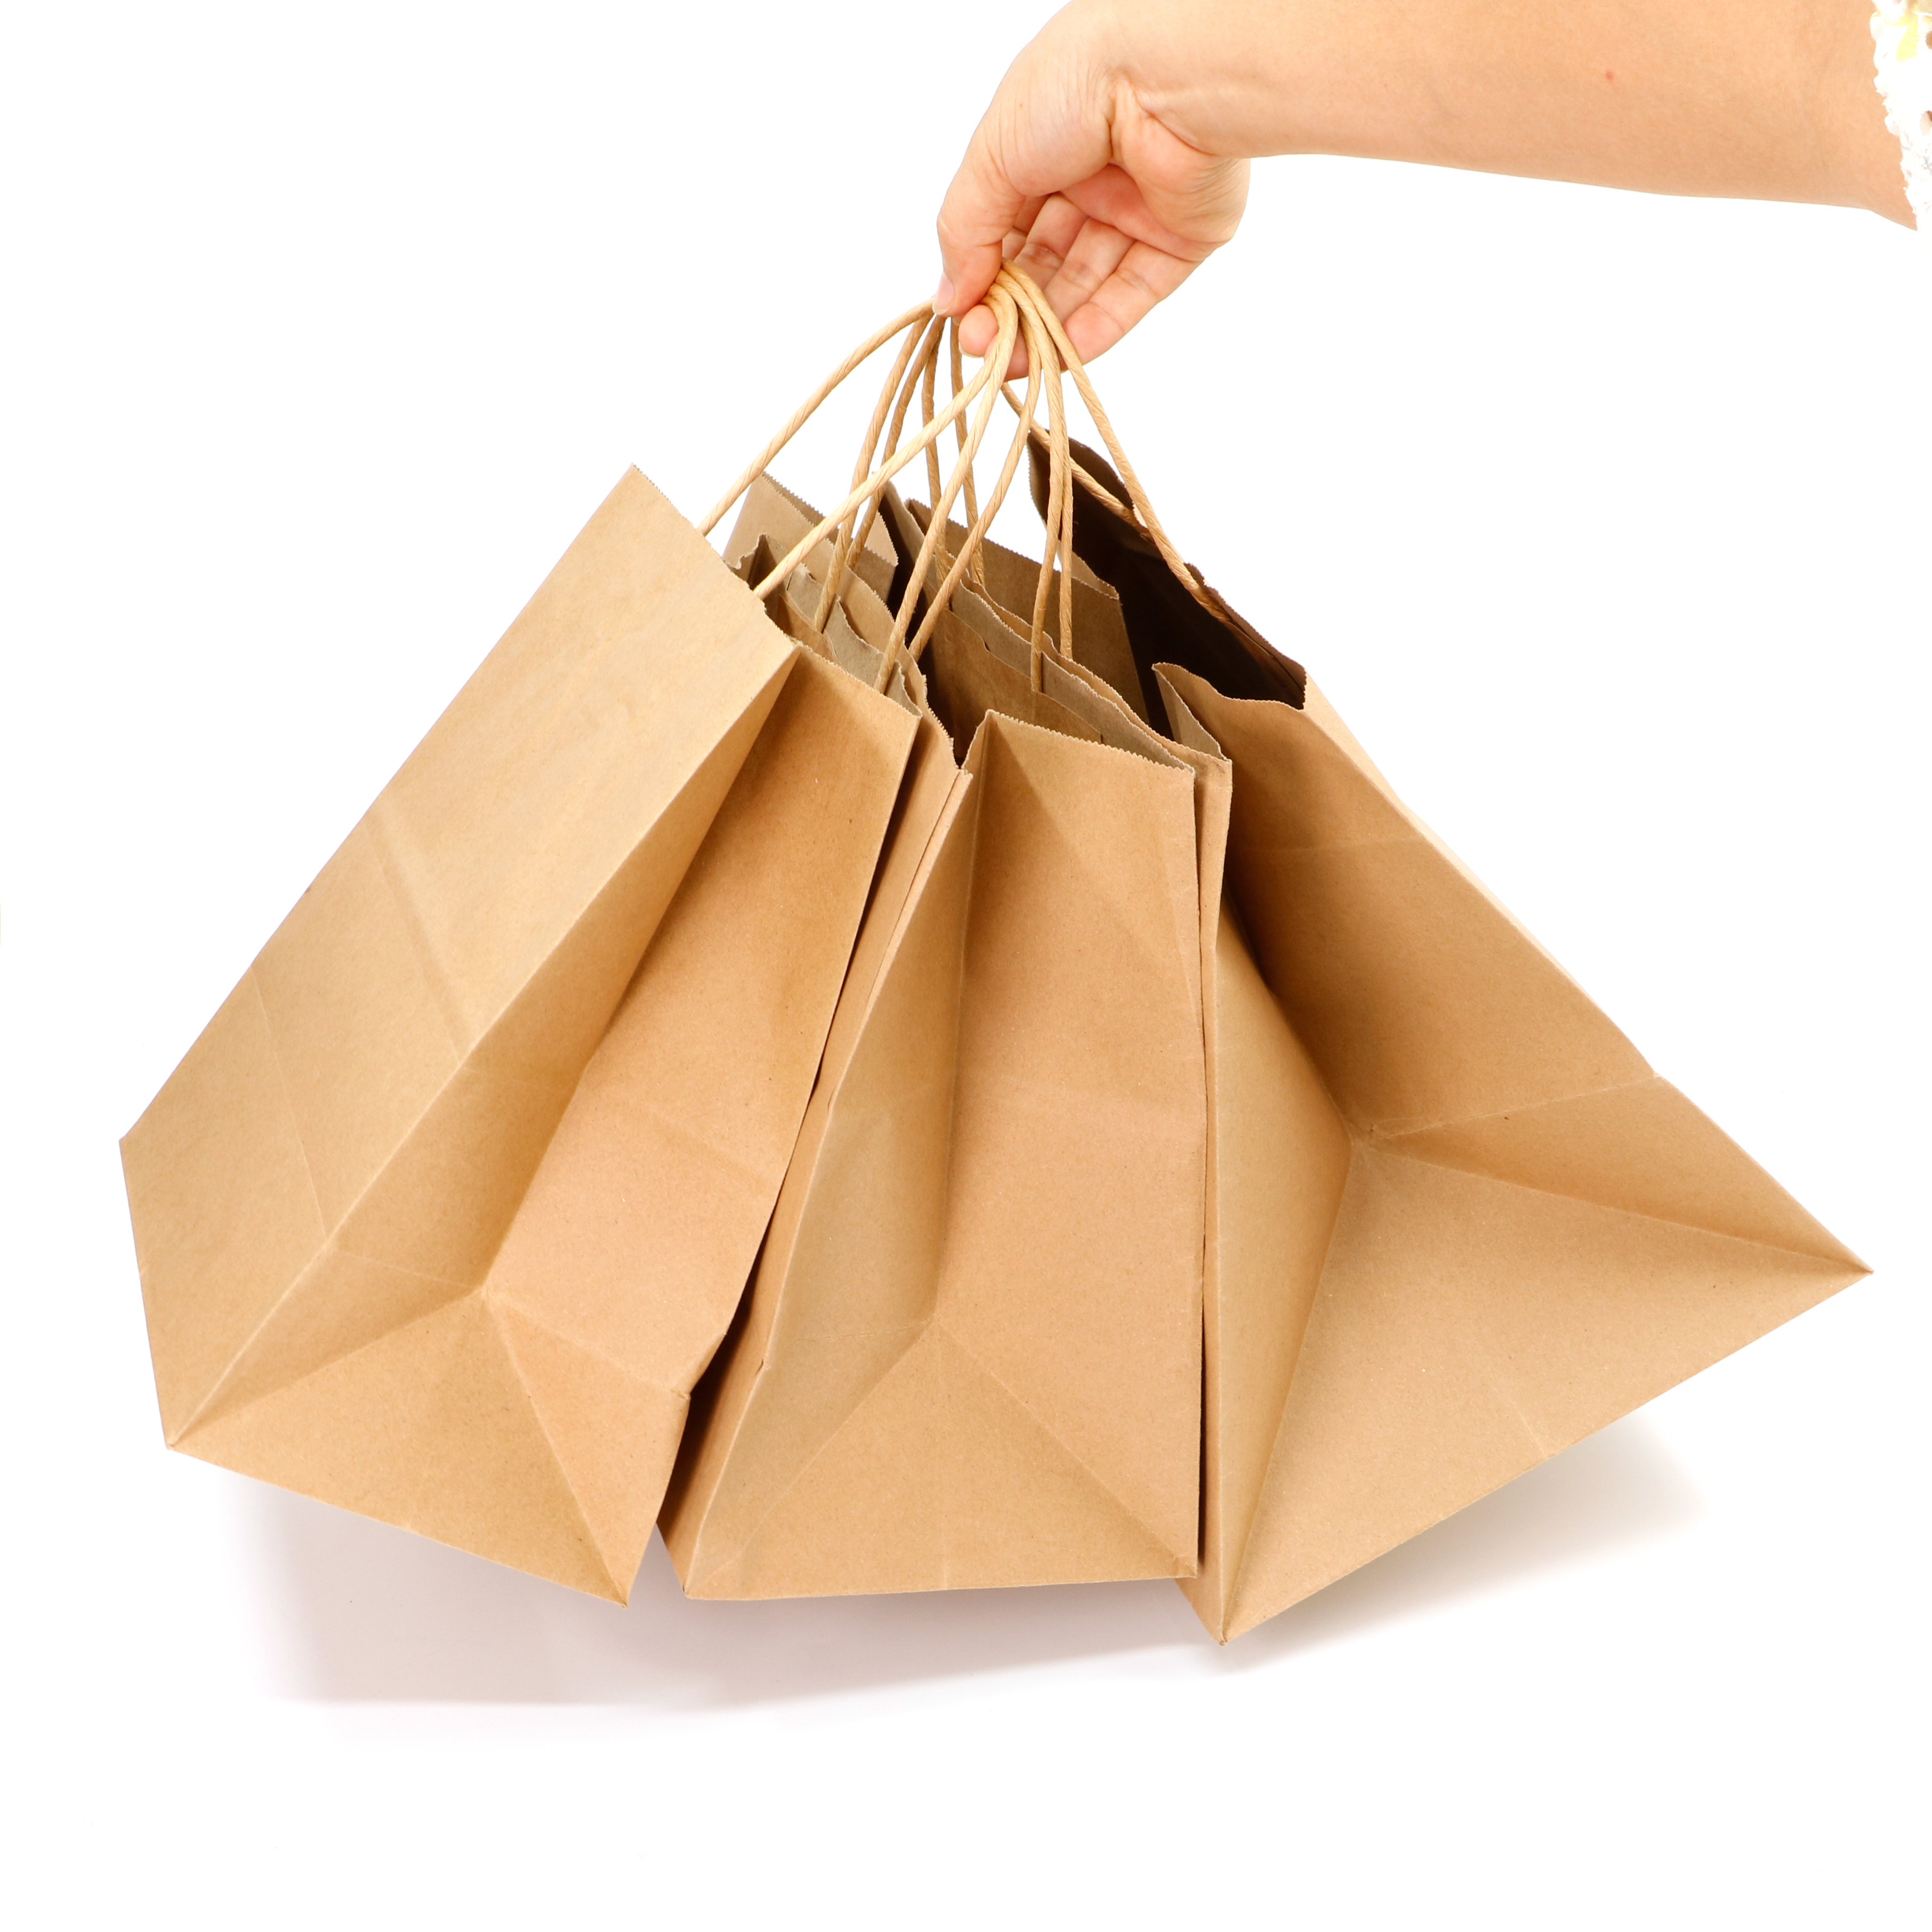 Kraft Paper Bag With Handle